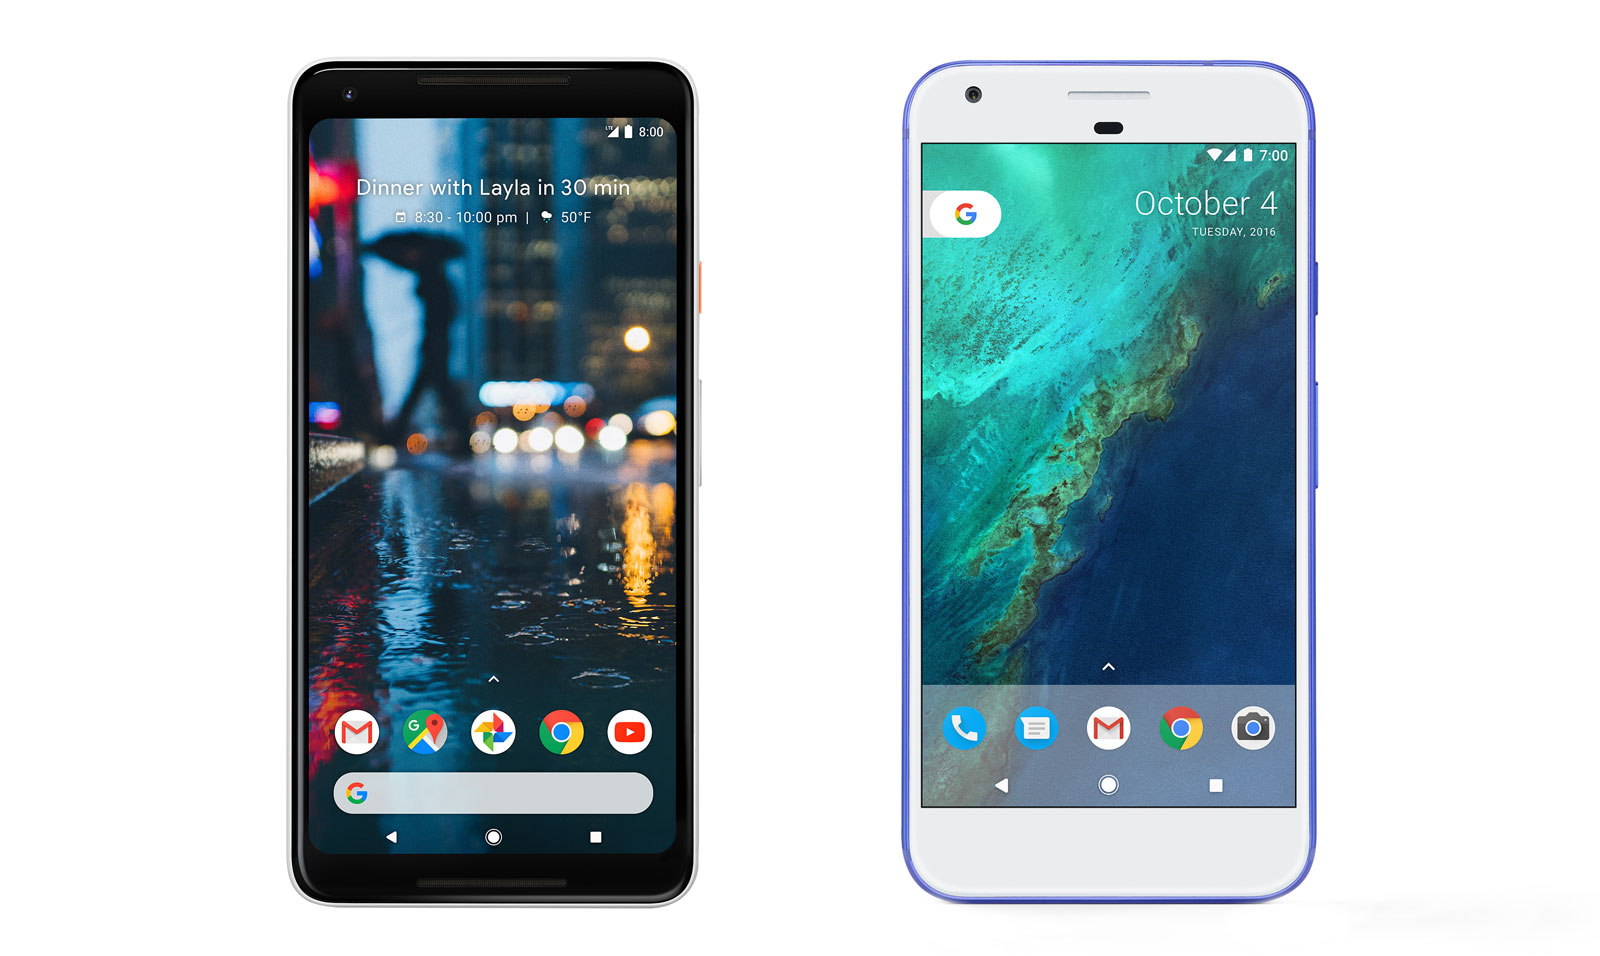 The Google Pixel 2 XL vs. the original Pixel XL: What's changed?